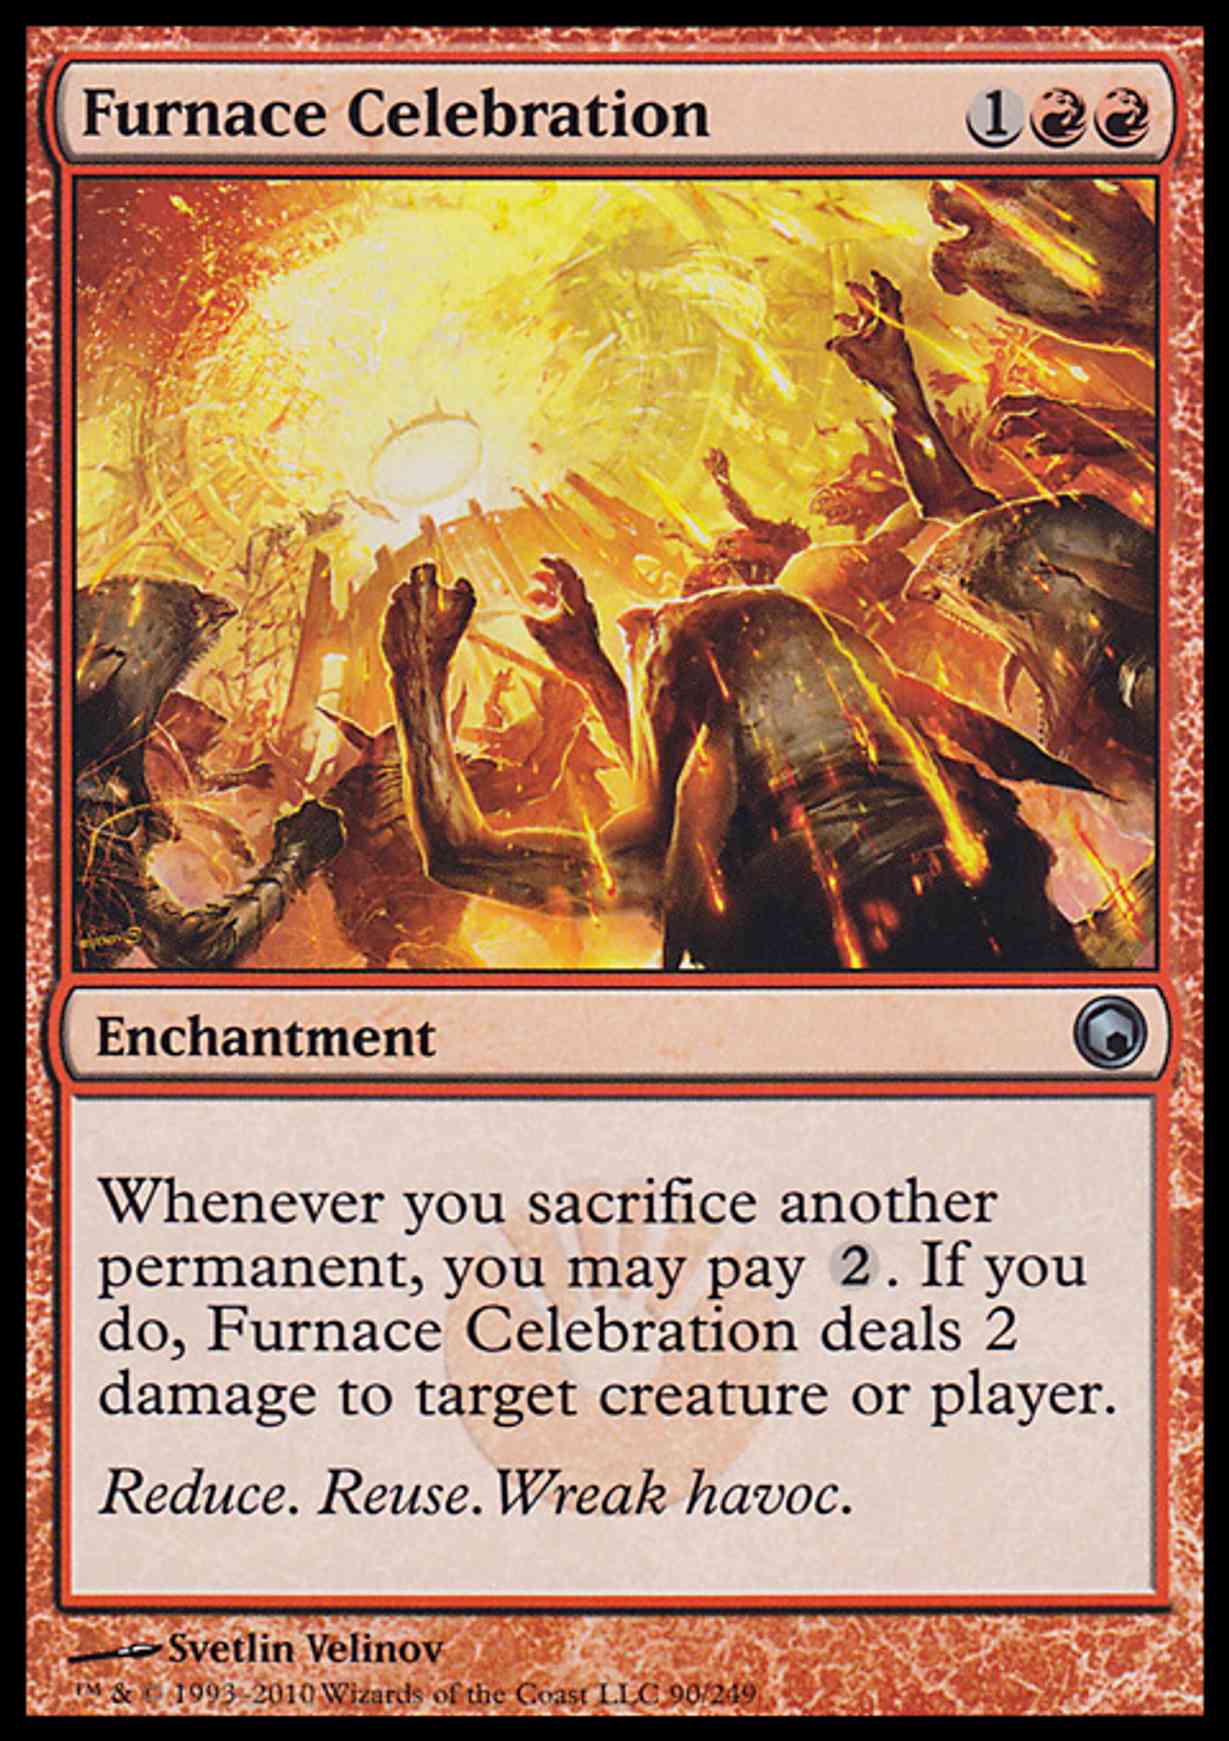 Furnace Celebration magic card front